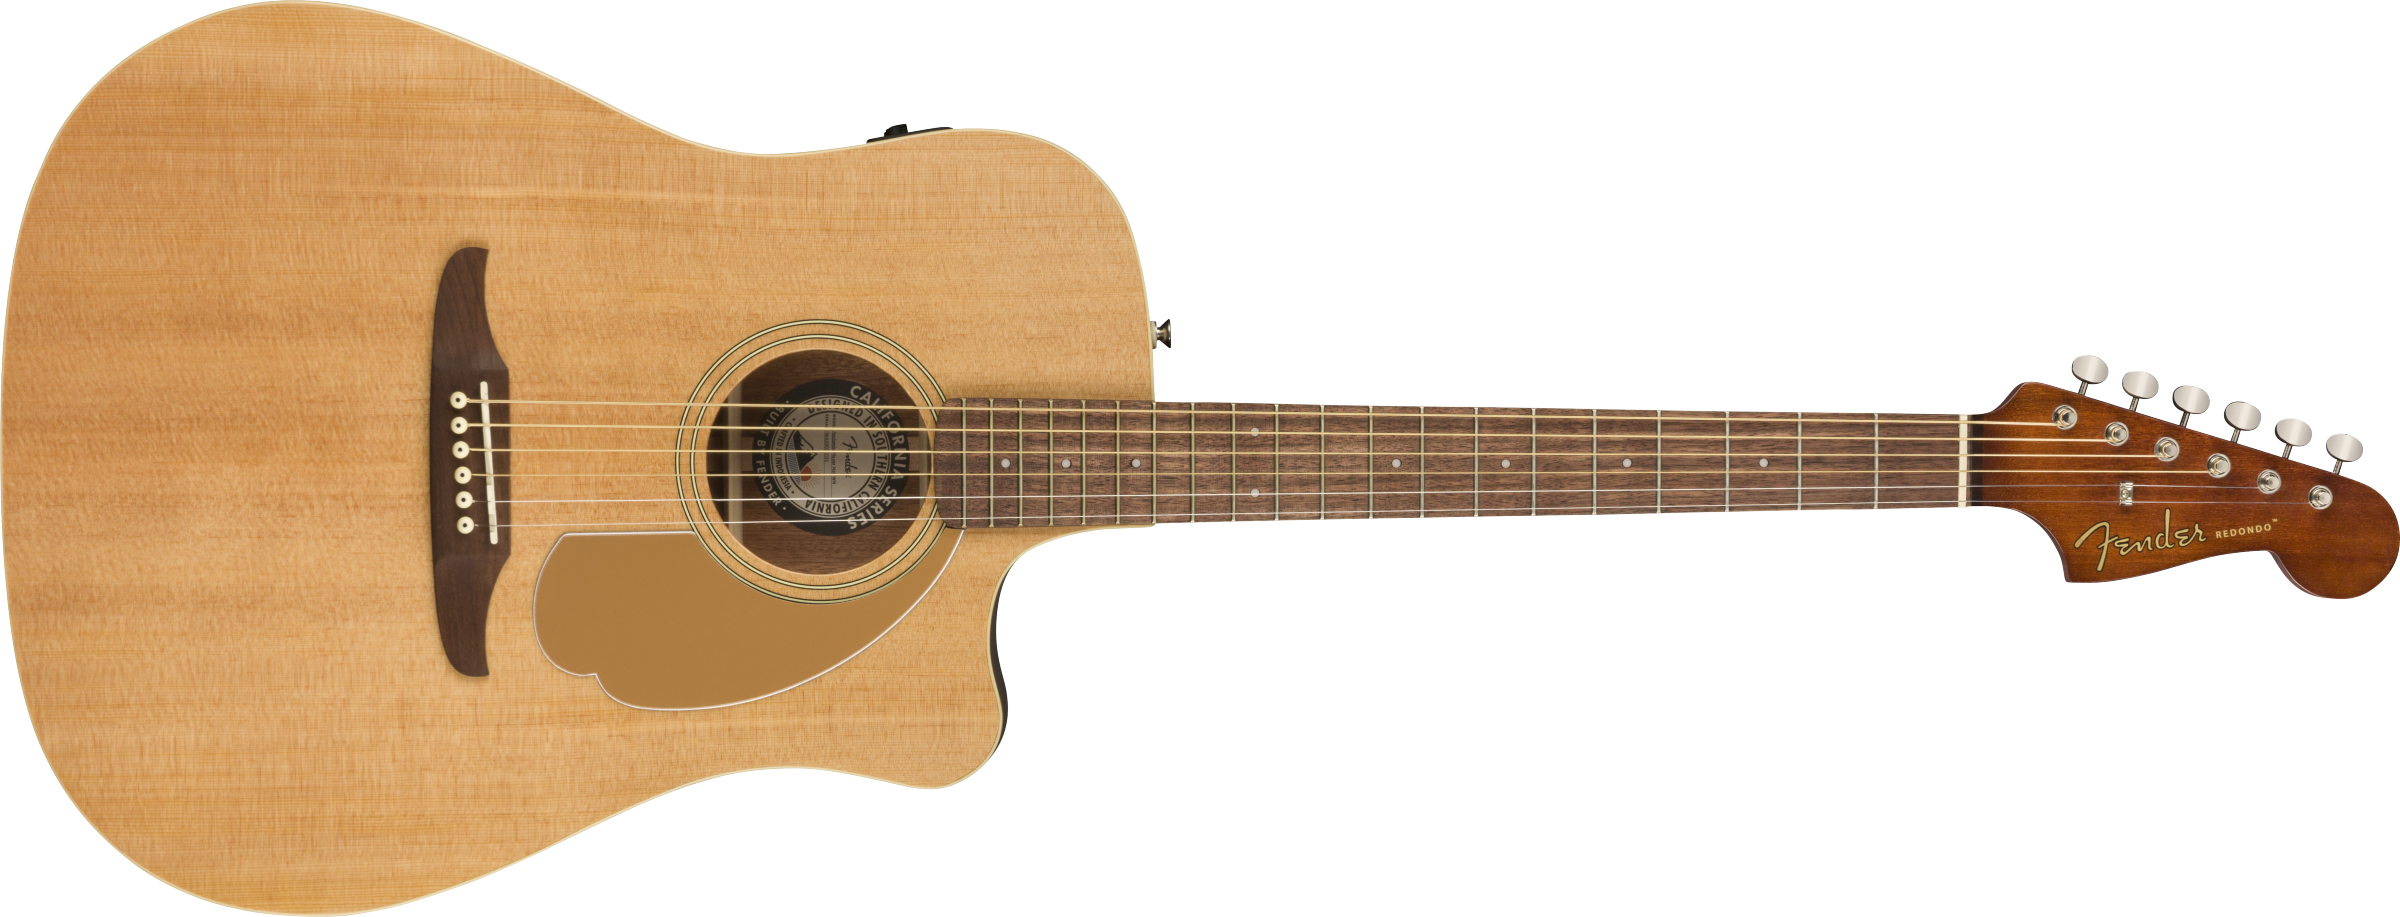 Fender® Redondo Player, Walnut Fingerboard, Natural